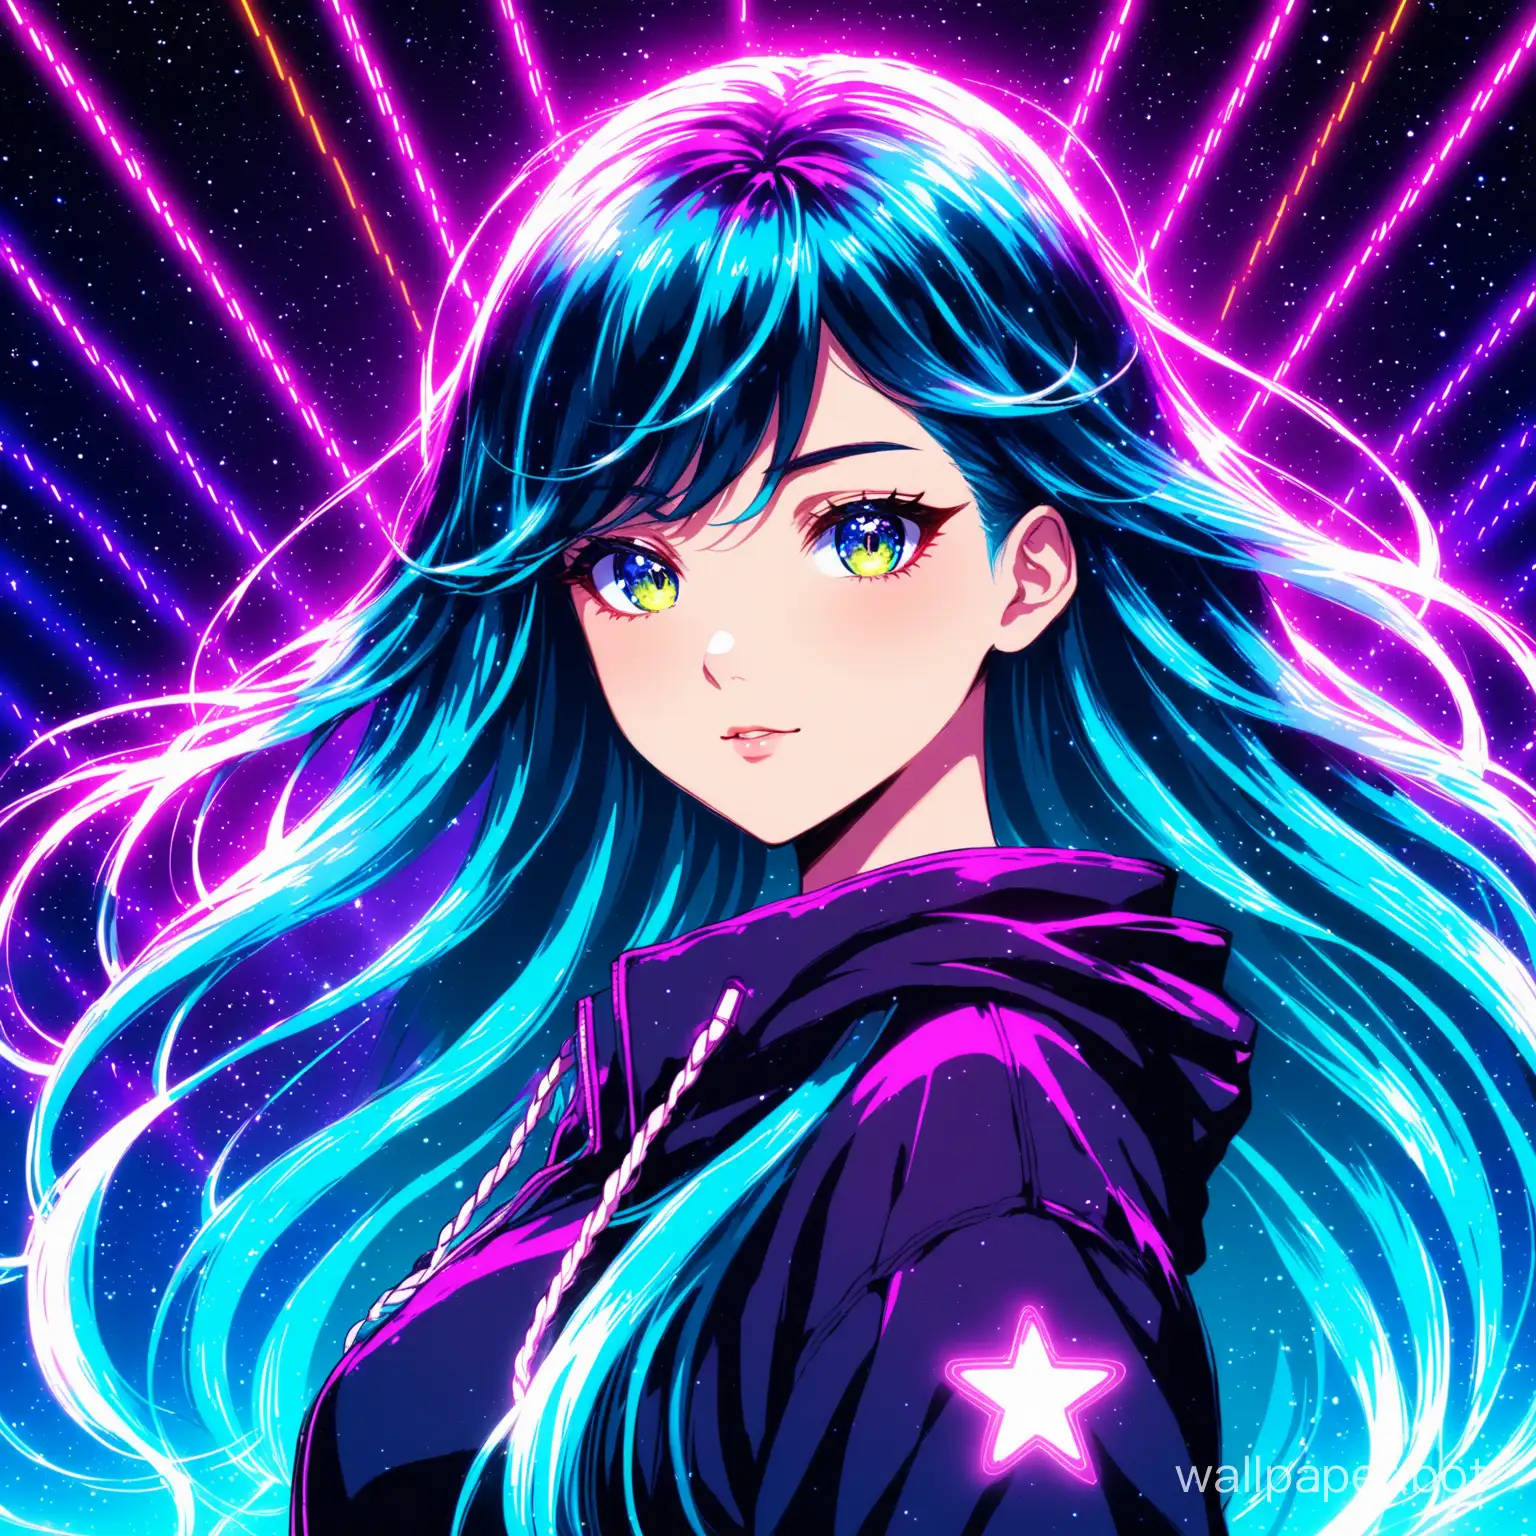 Futuristic-Anime-Girl-with-Neon-Glowing-Hair-in-Digital-Art